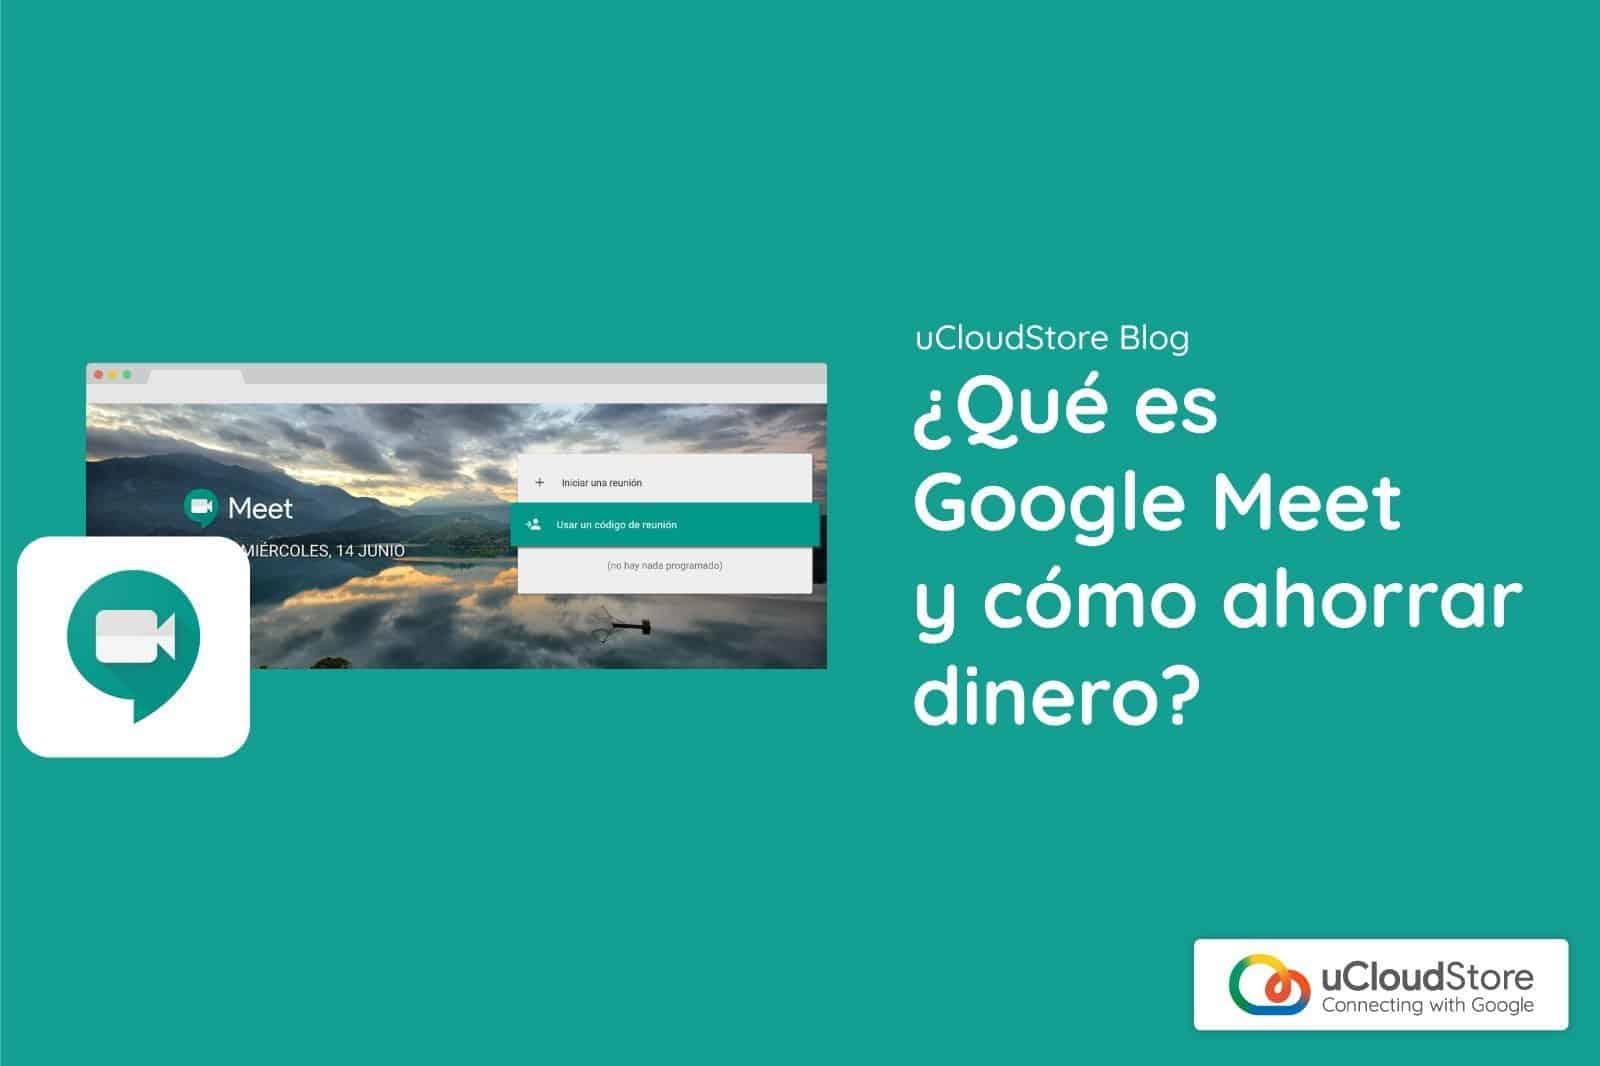 google-meet-que-es-ucloudstore-03